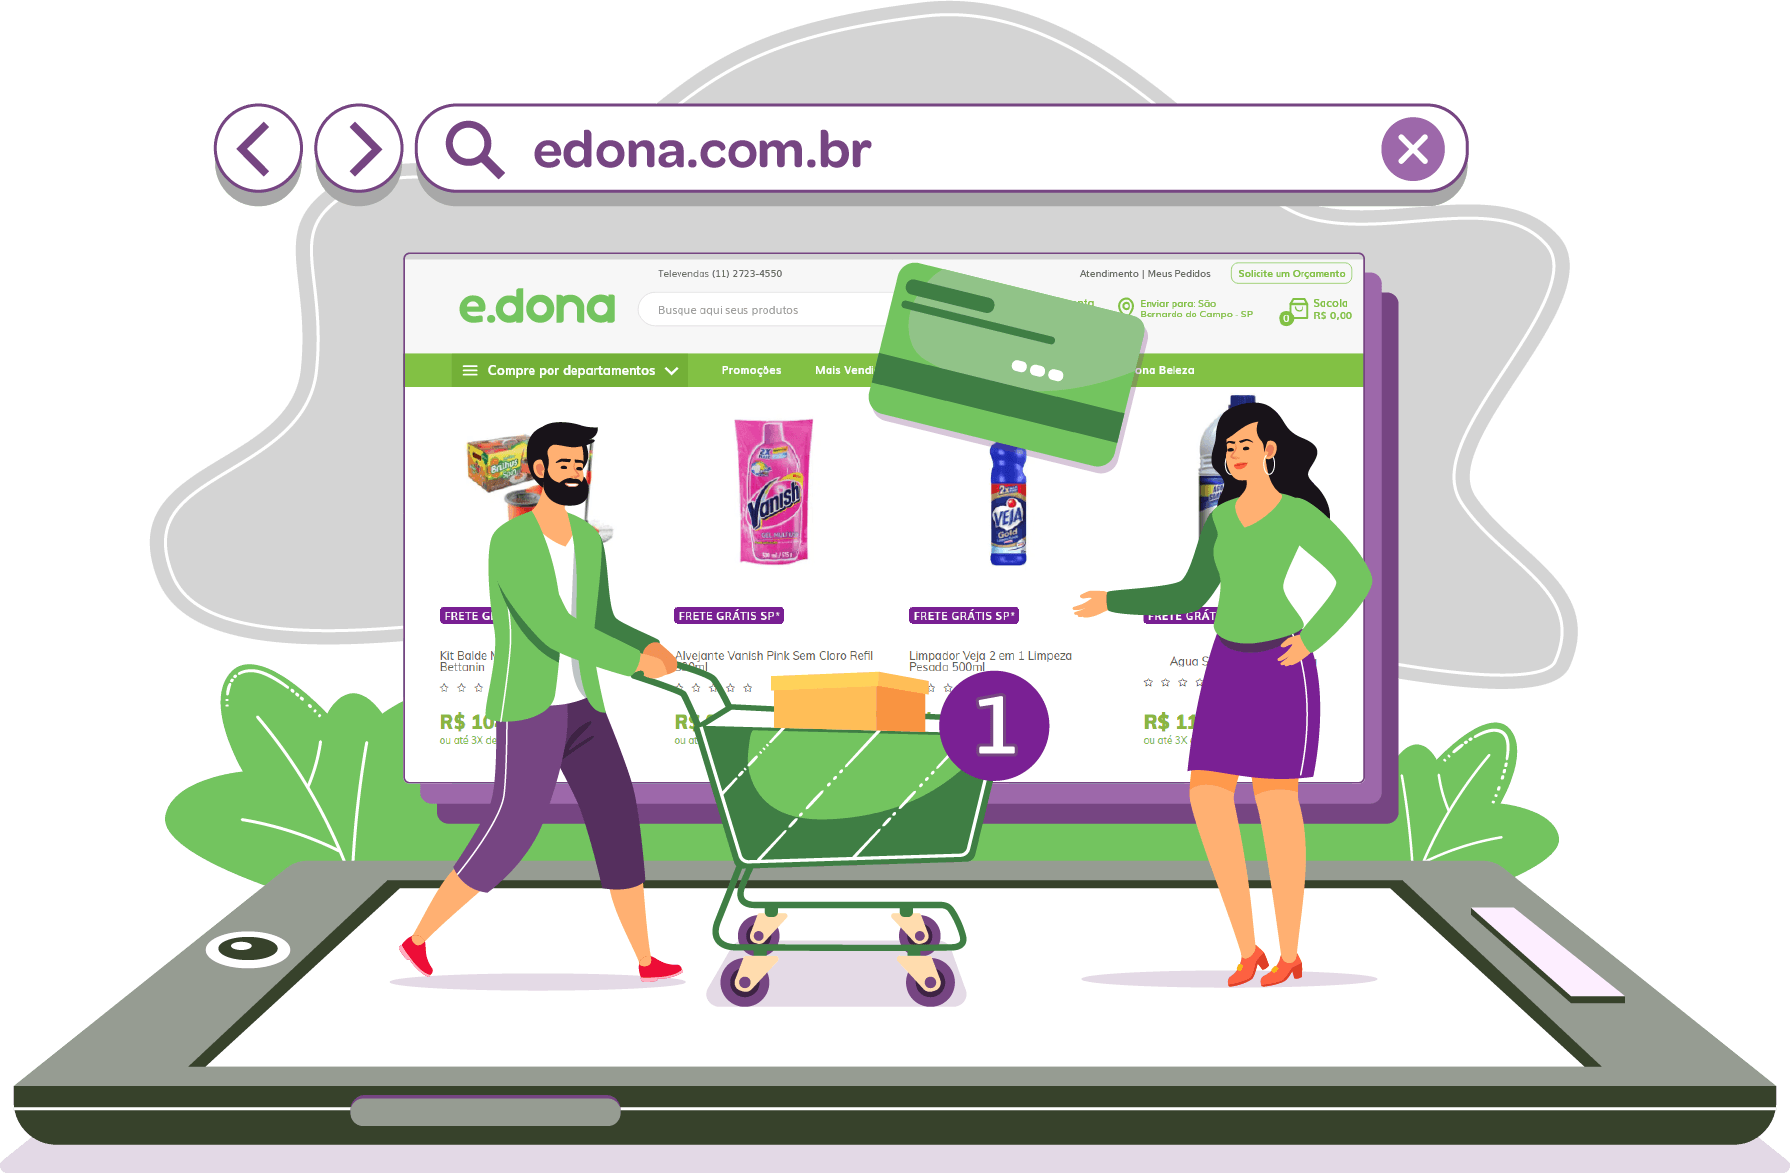 edona.com.br